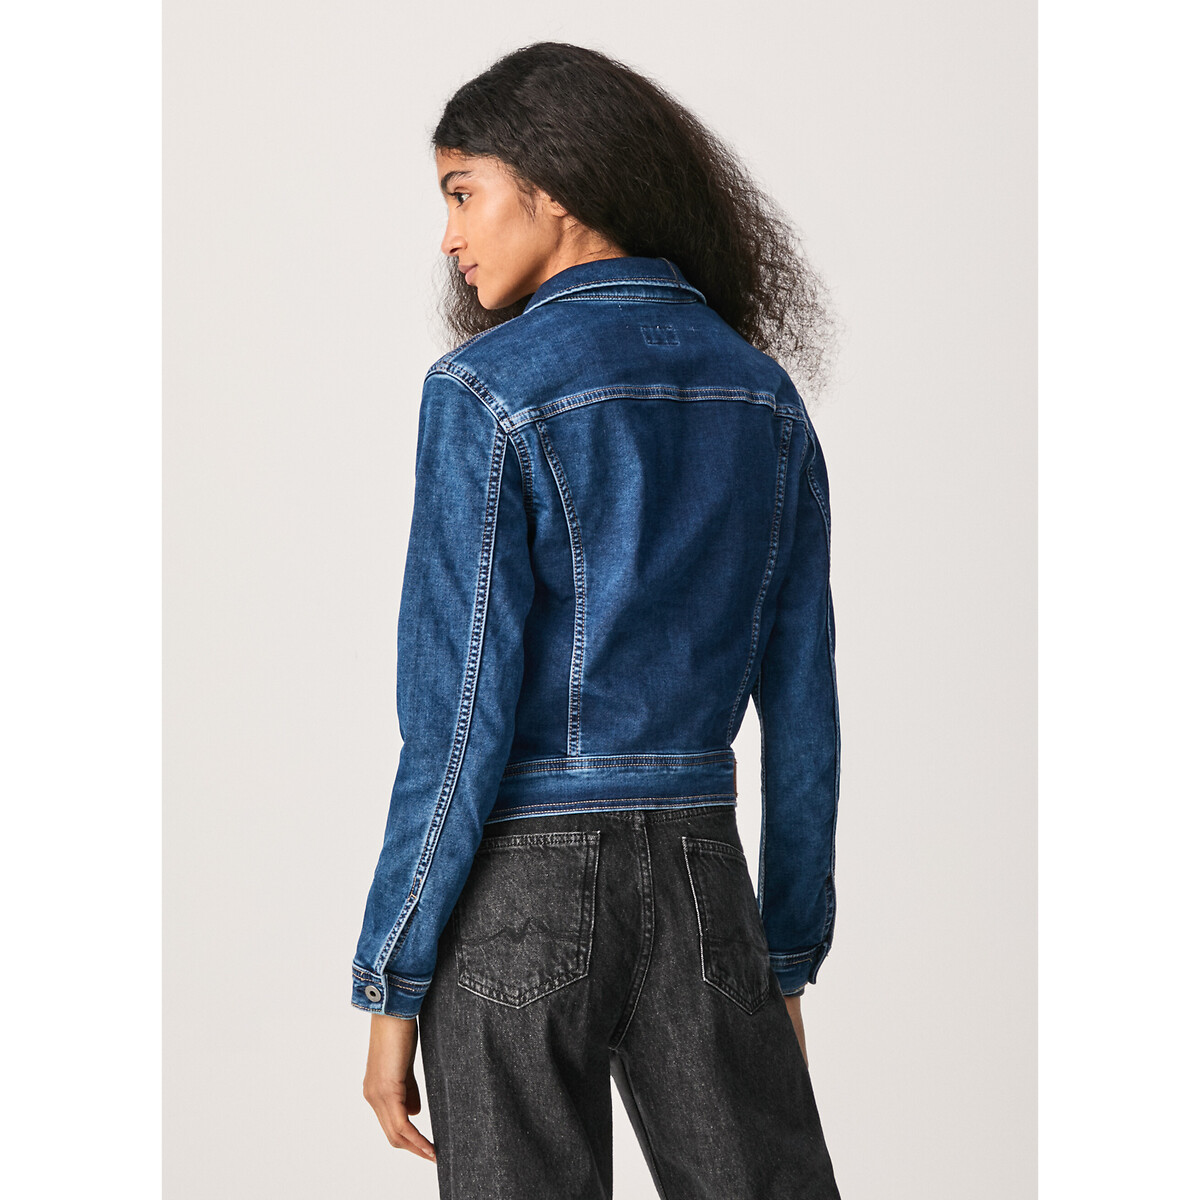 Жакет Короткий из джинсовой ткани S синий LaRedoute, размер S - фото 2